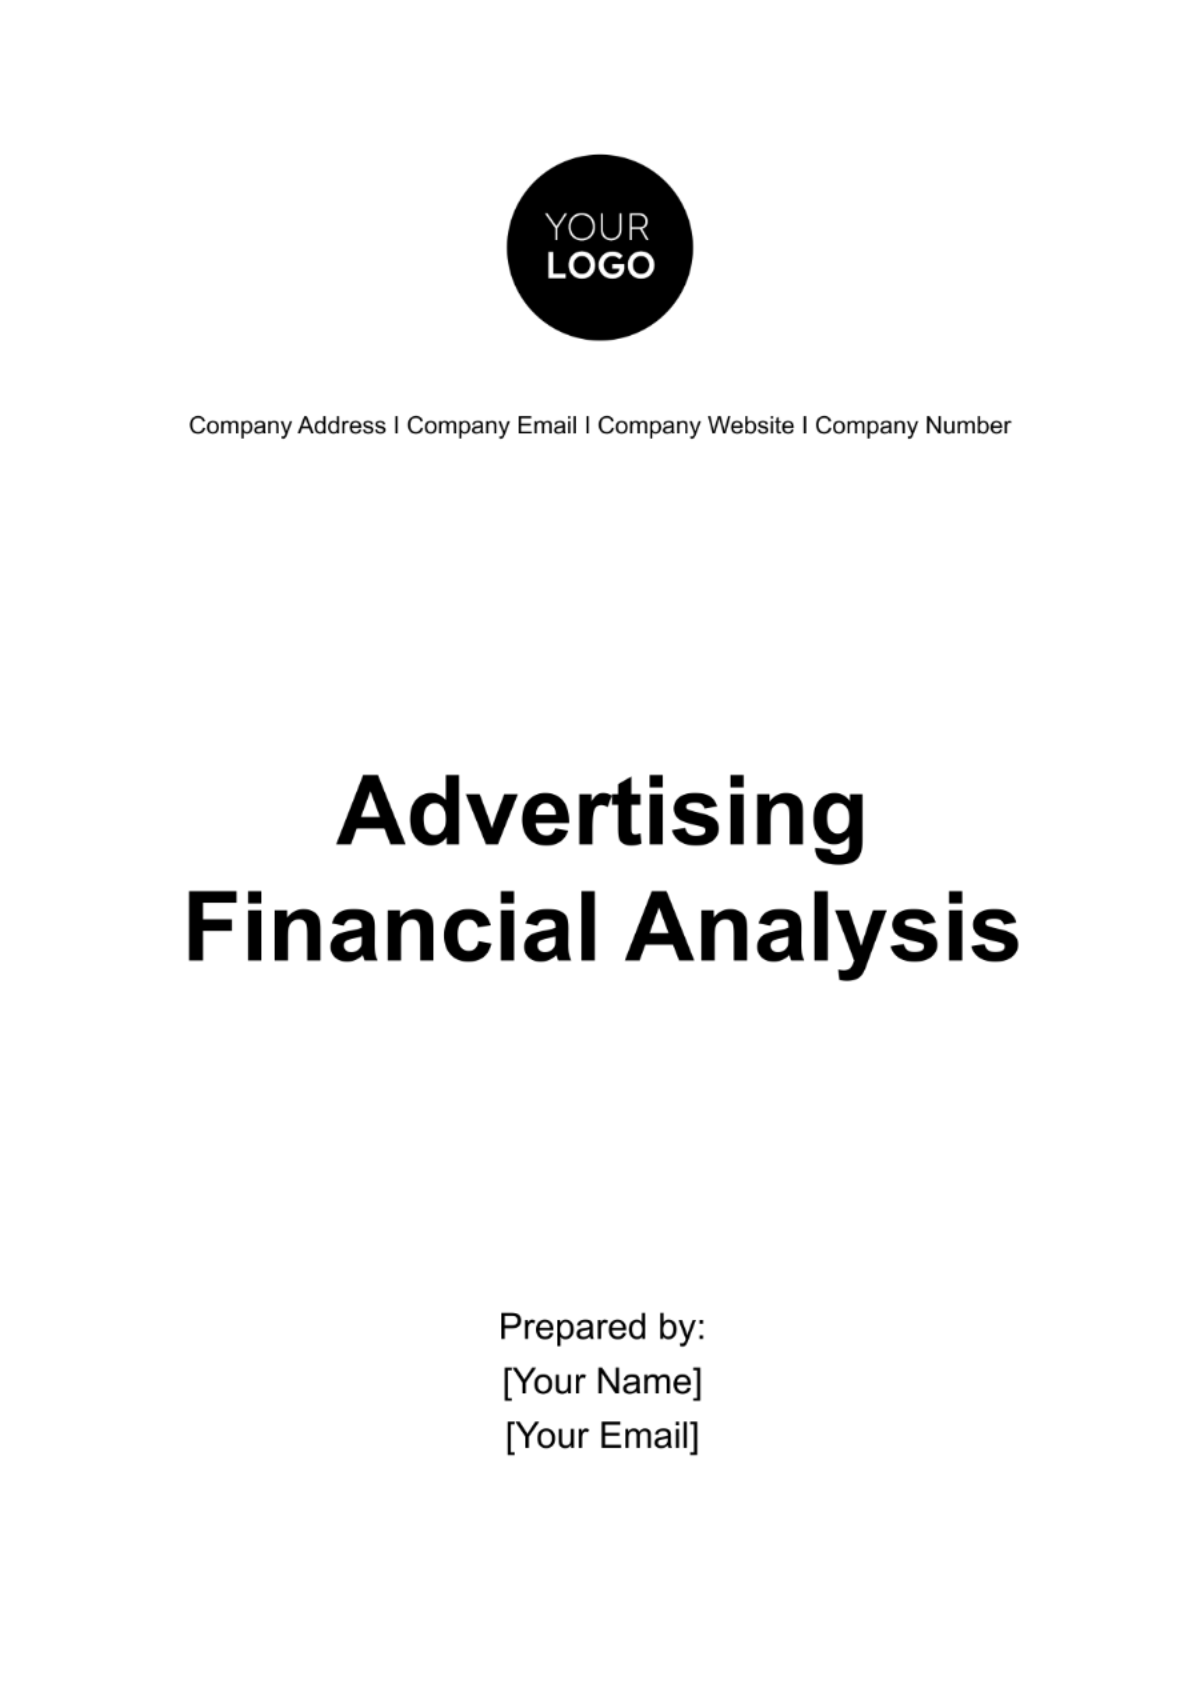 Advertising Financial Analysis Template